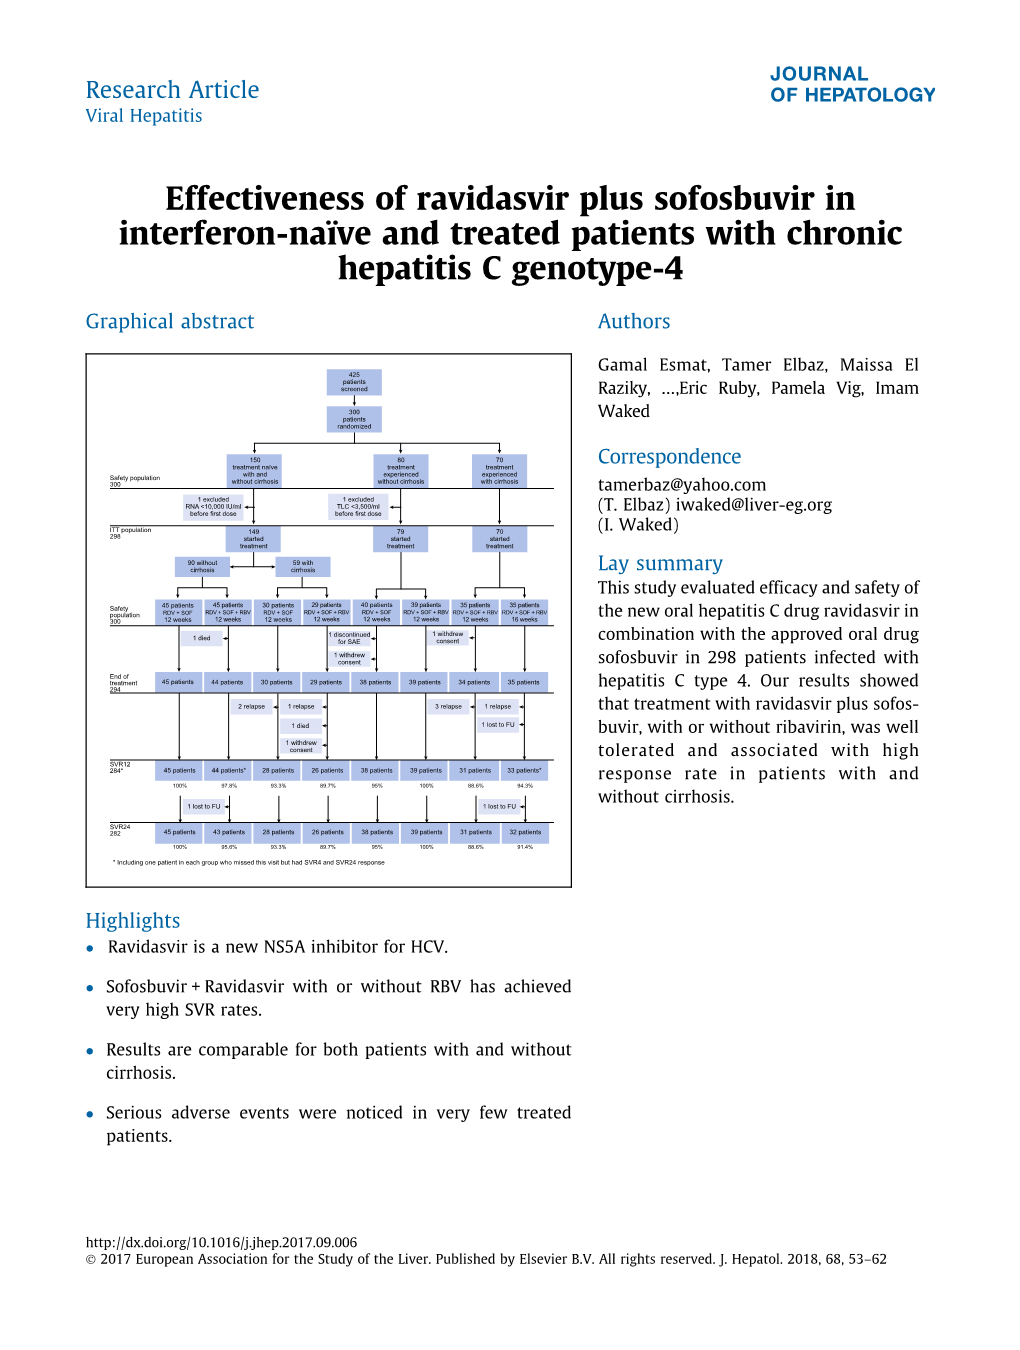 Effectiveness of Ravidasvir Plus Sofosbuvir in Interferon-Naã¯Ve And